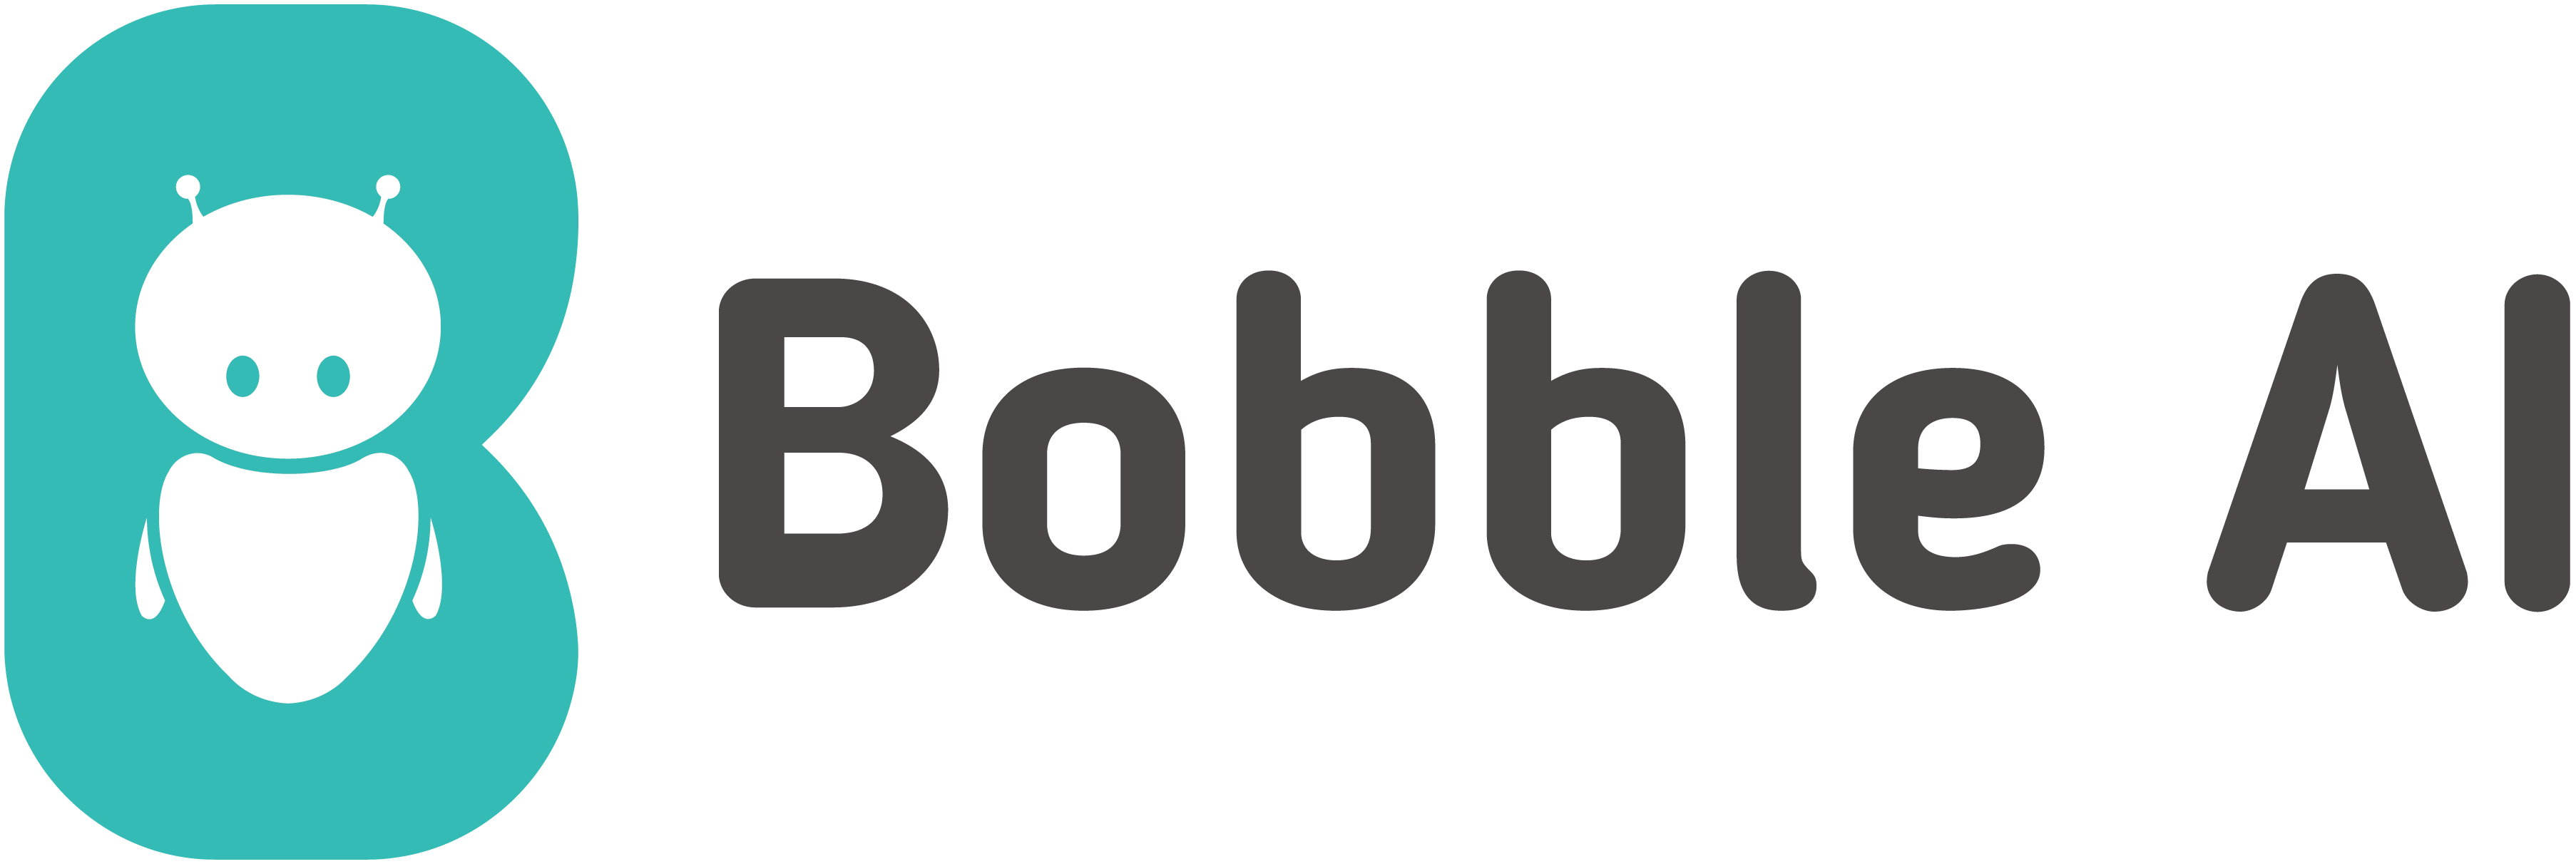 Bobble Logo